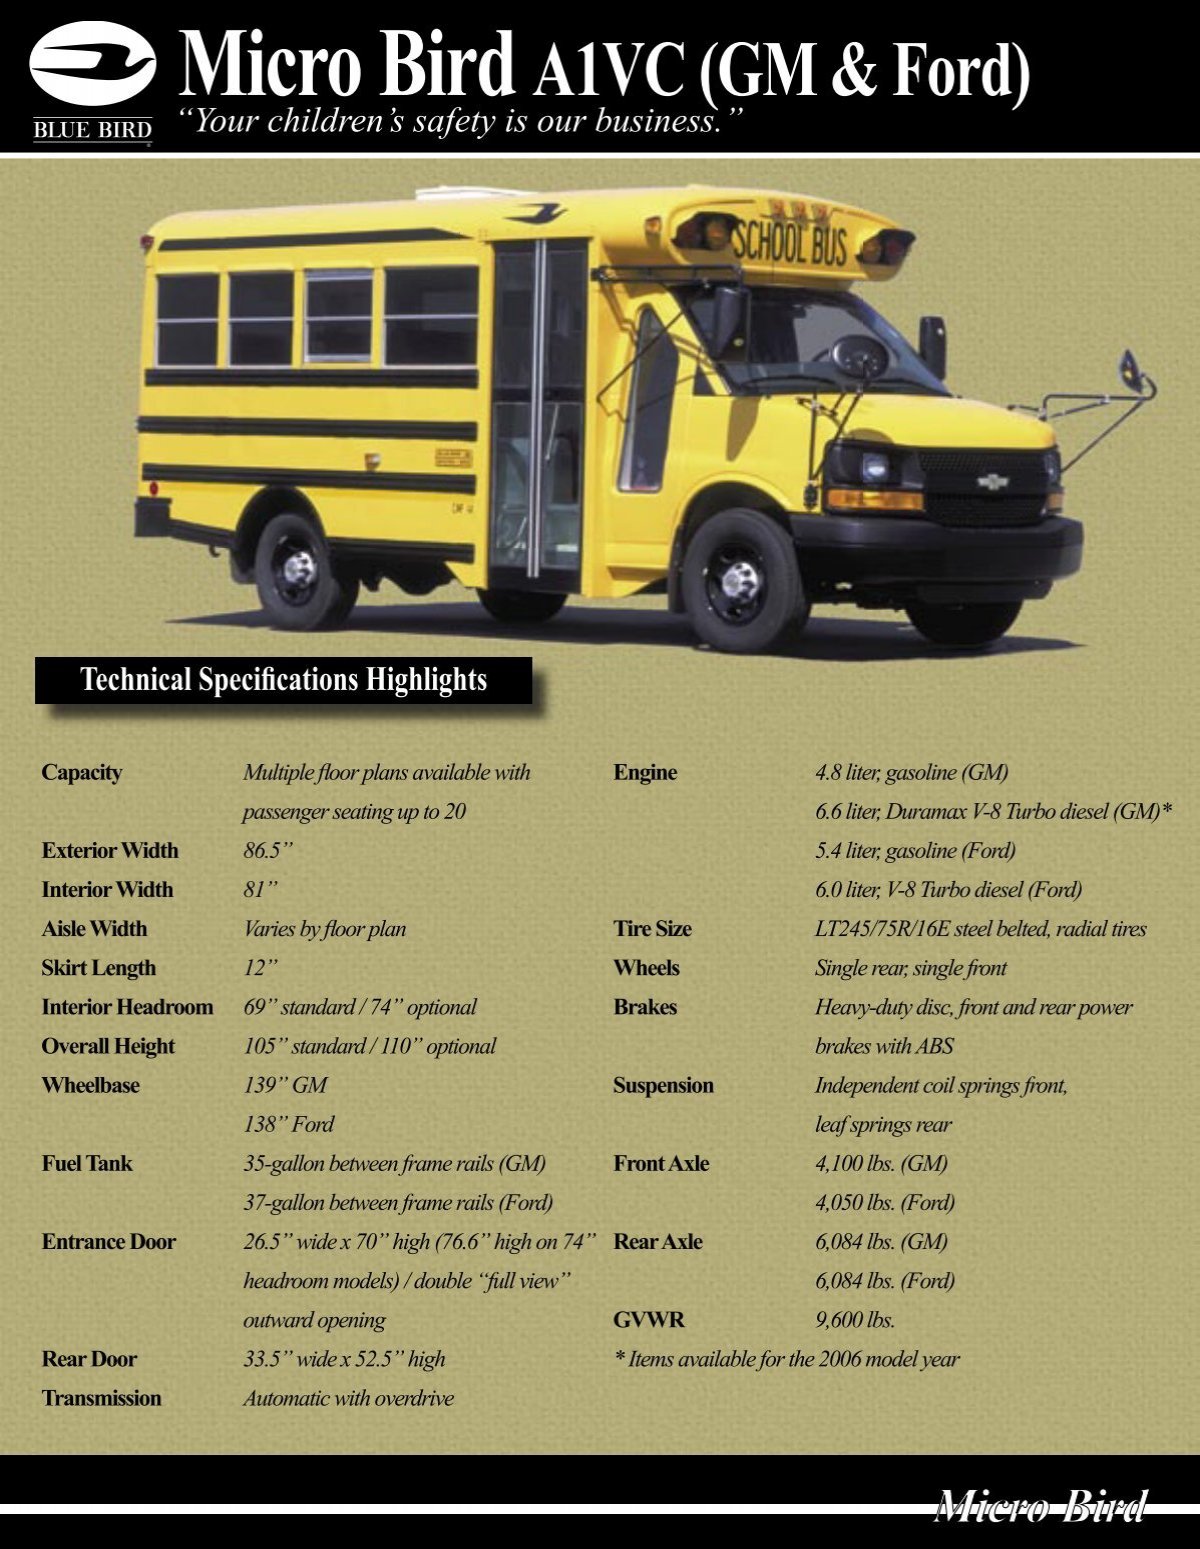 Braun Lift Troubleshooting - Millenium 2 Series - New York Bus Sales